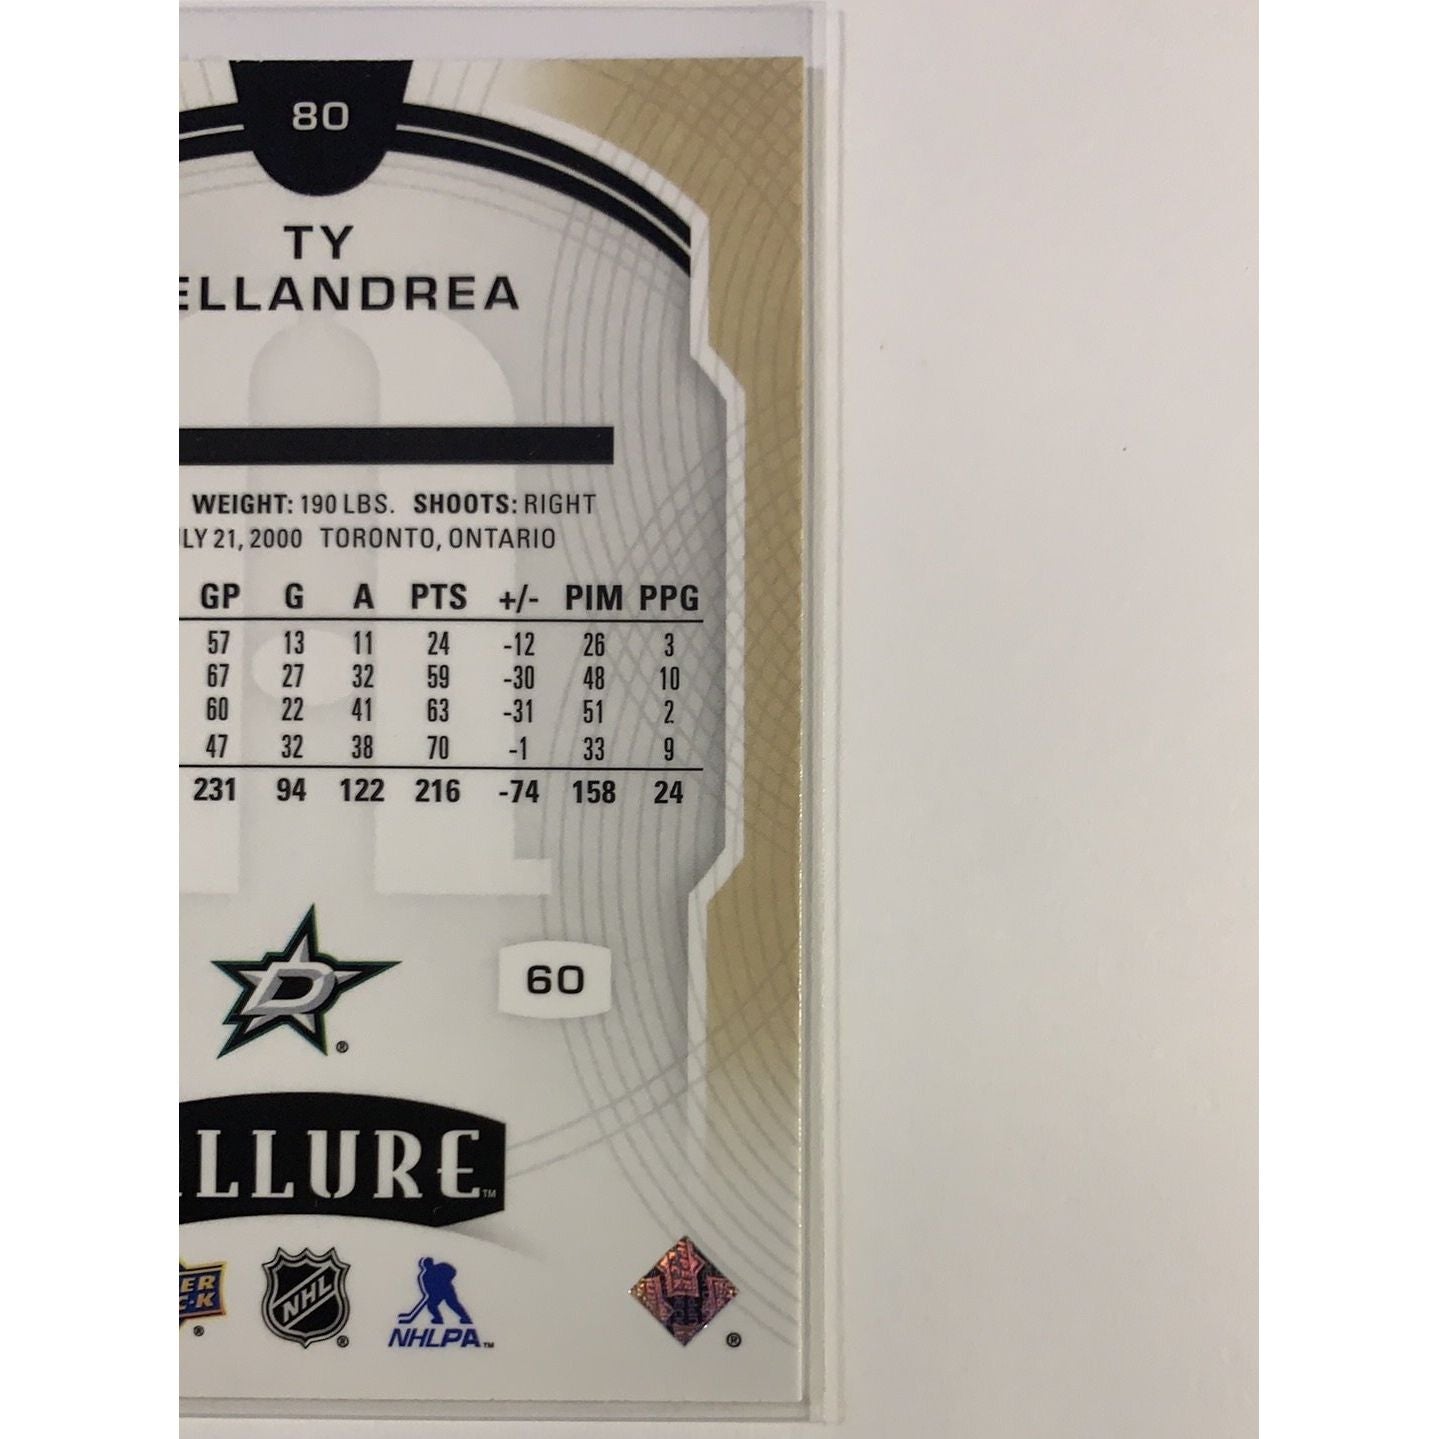  2020-21 Allure Ty Dellandrea Rookie Card  Local Legends Cards & Collectibles